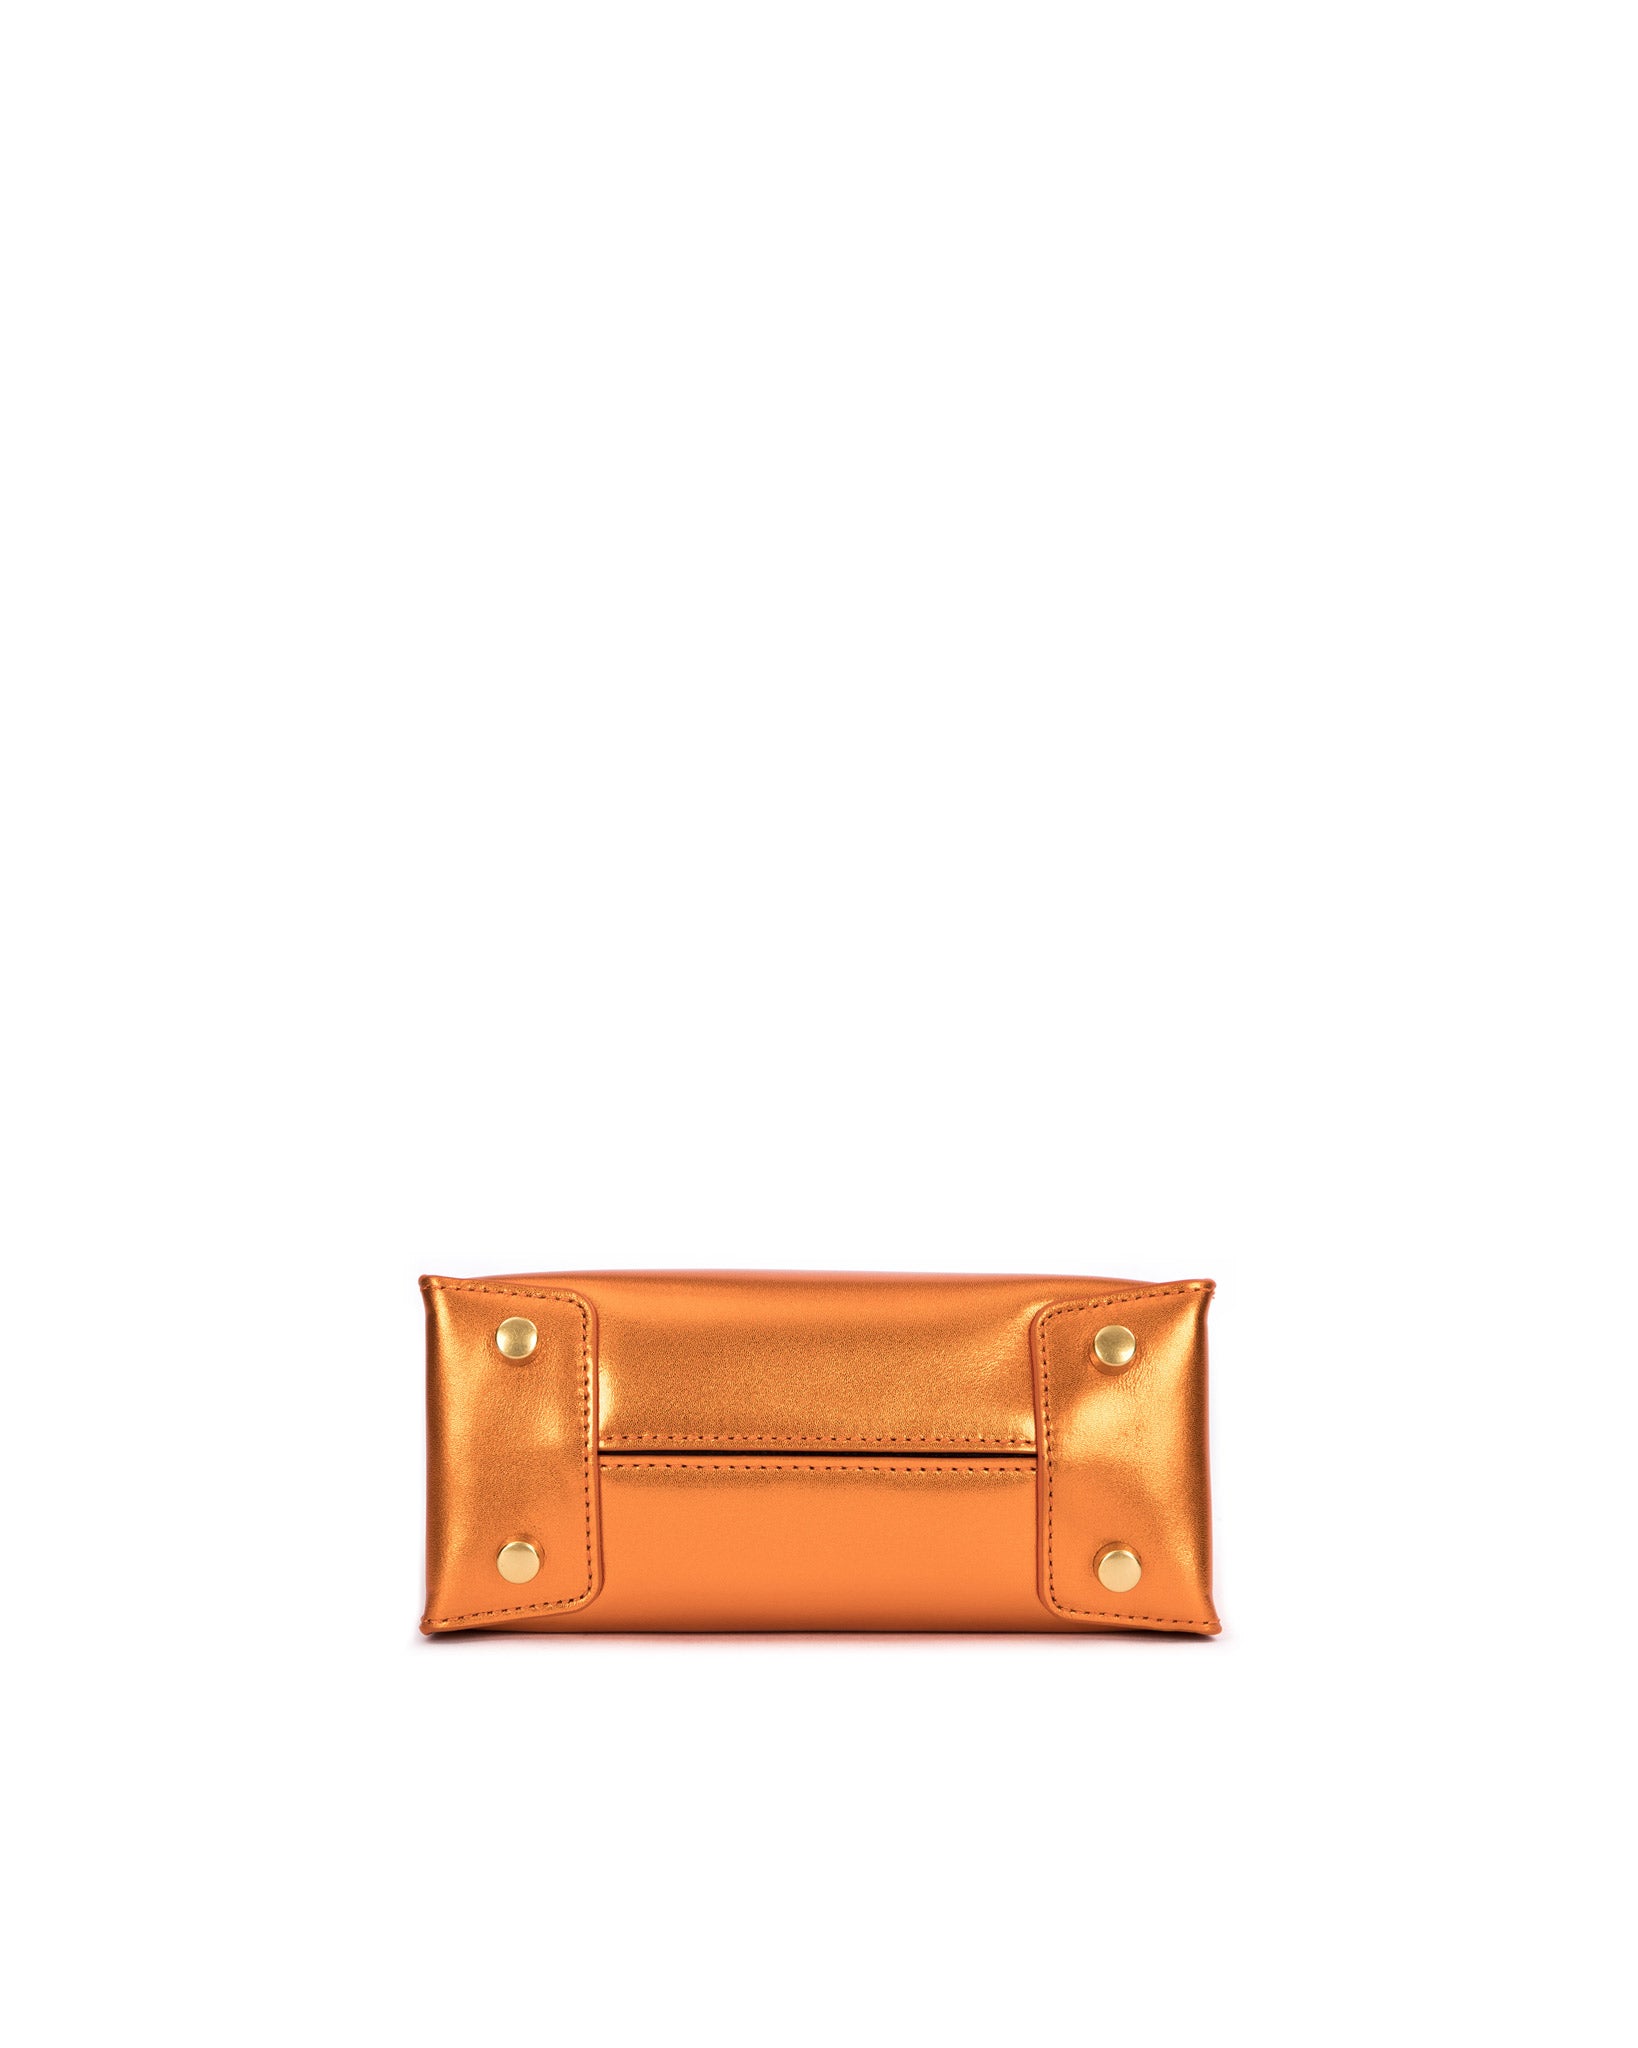 Brandon Blackwood New York - Kuei Bag - Metallic Orange Leather